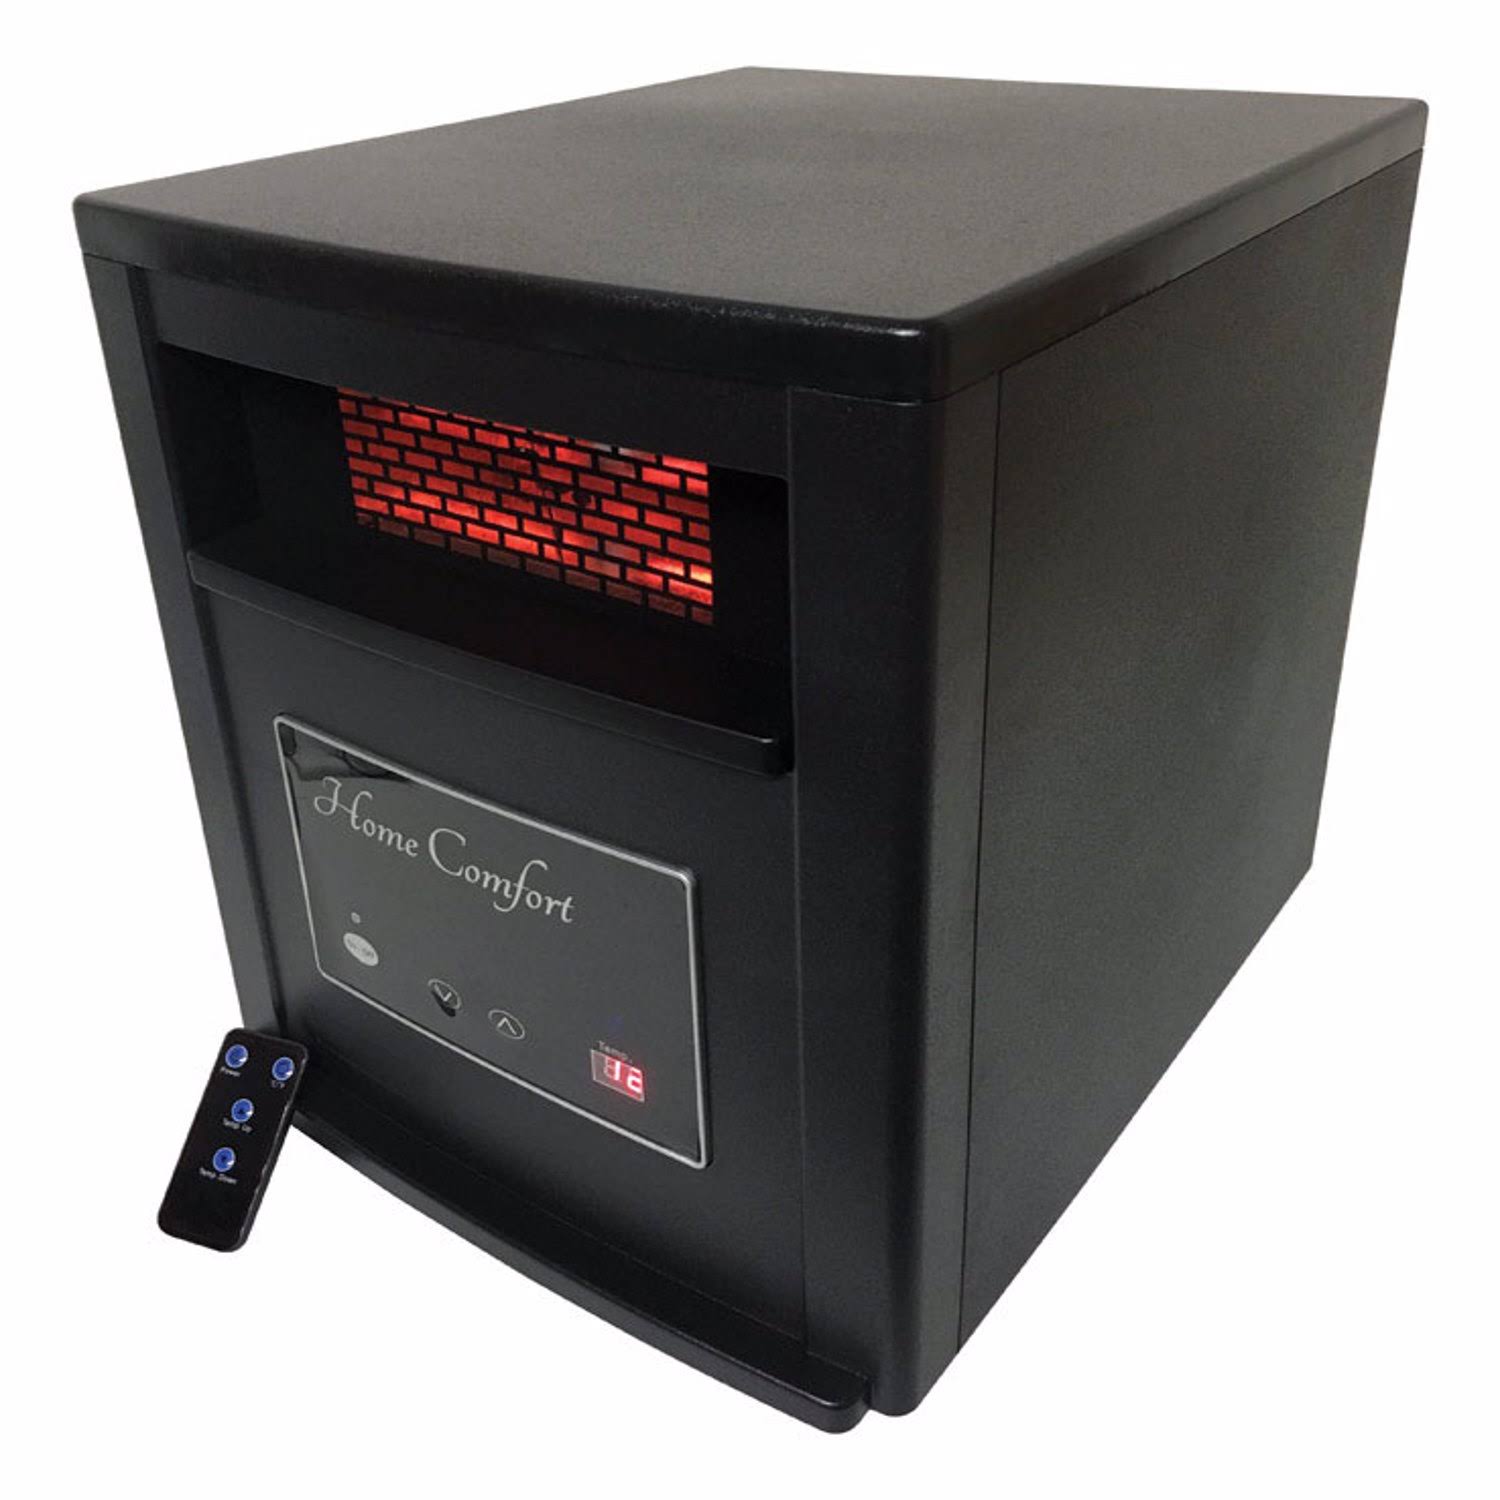 Home Comfort Portable 1500 Watt Electric Infrared Cabinet Heater 17"H X 16"W X 13"D